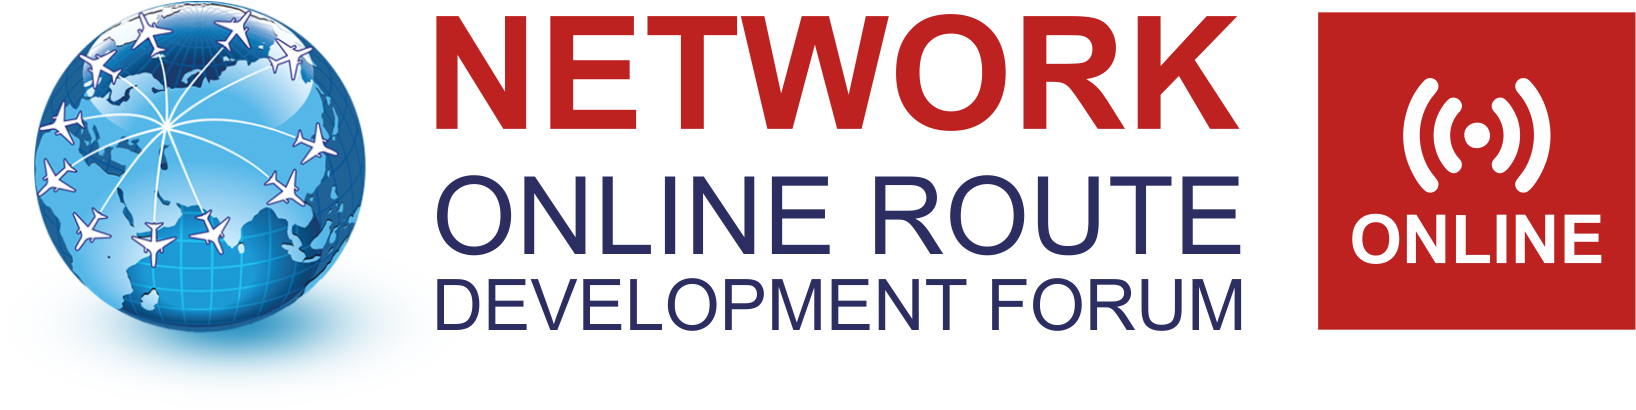 NETWORK ONLINE - форум по развитию пассажирских маршрутов 2020